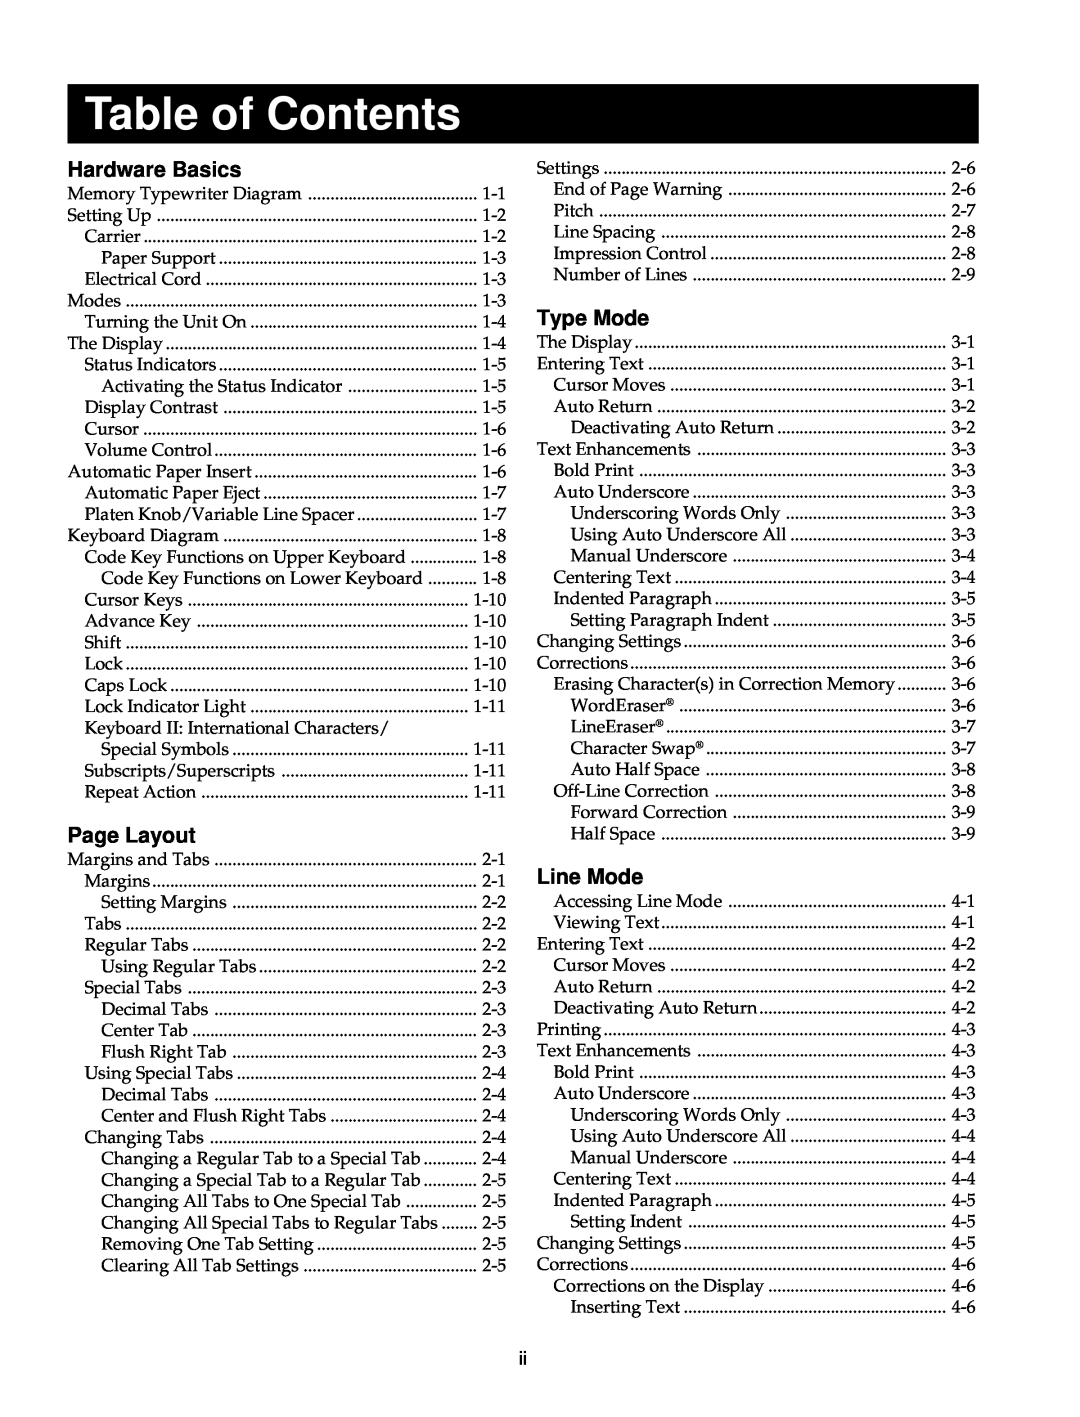 Smith Corona Typewriter manual Table of Contents, Hardware Basics, Page Layout, Type Mode, Line Mode 